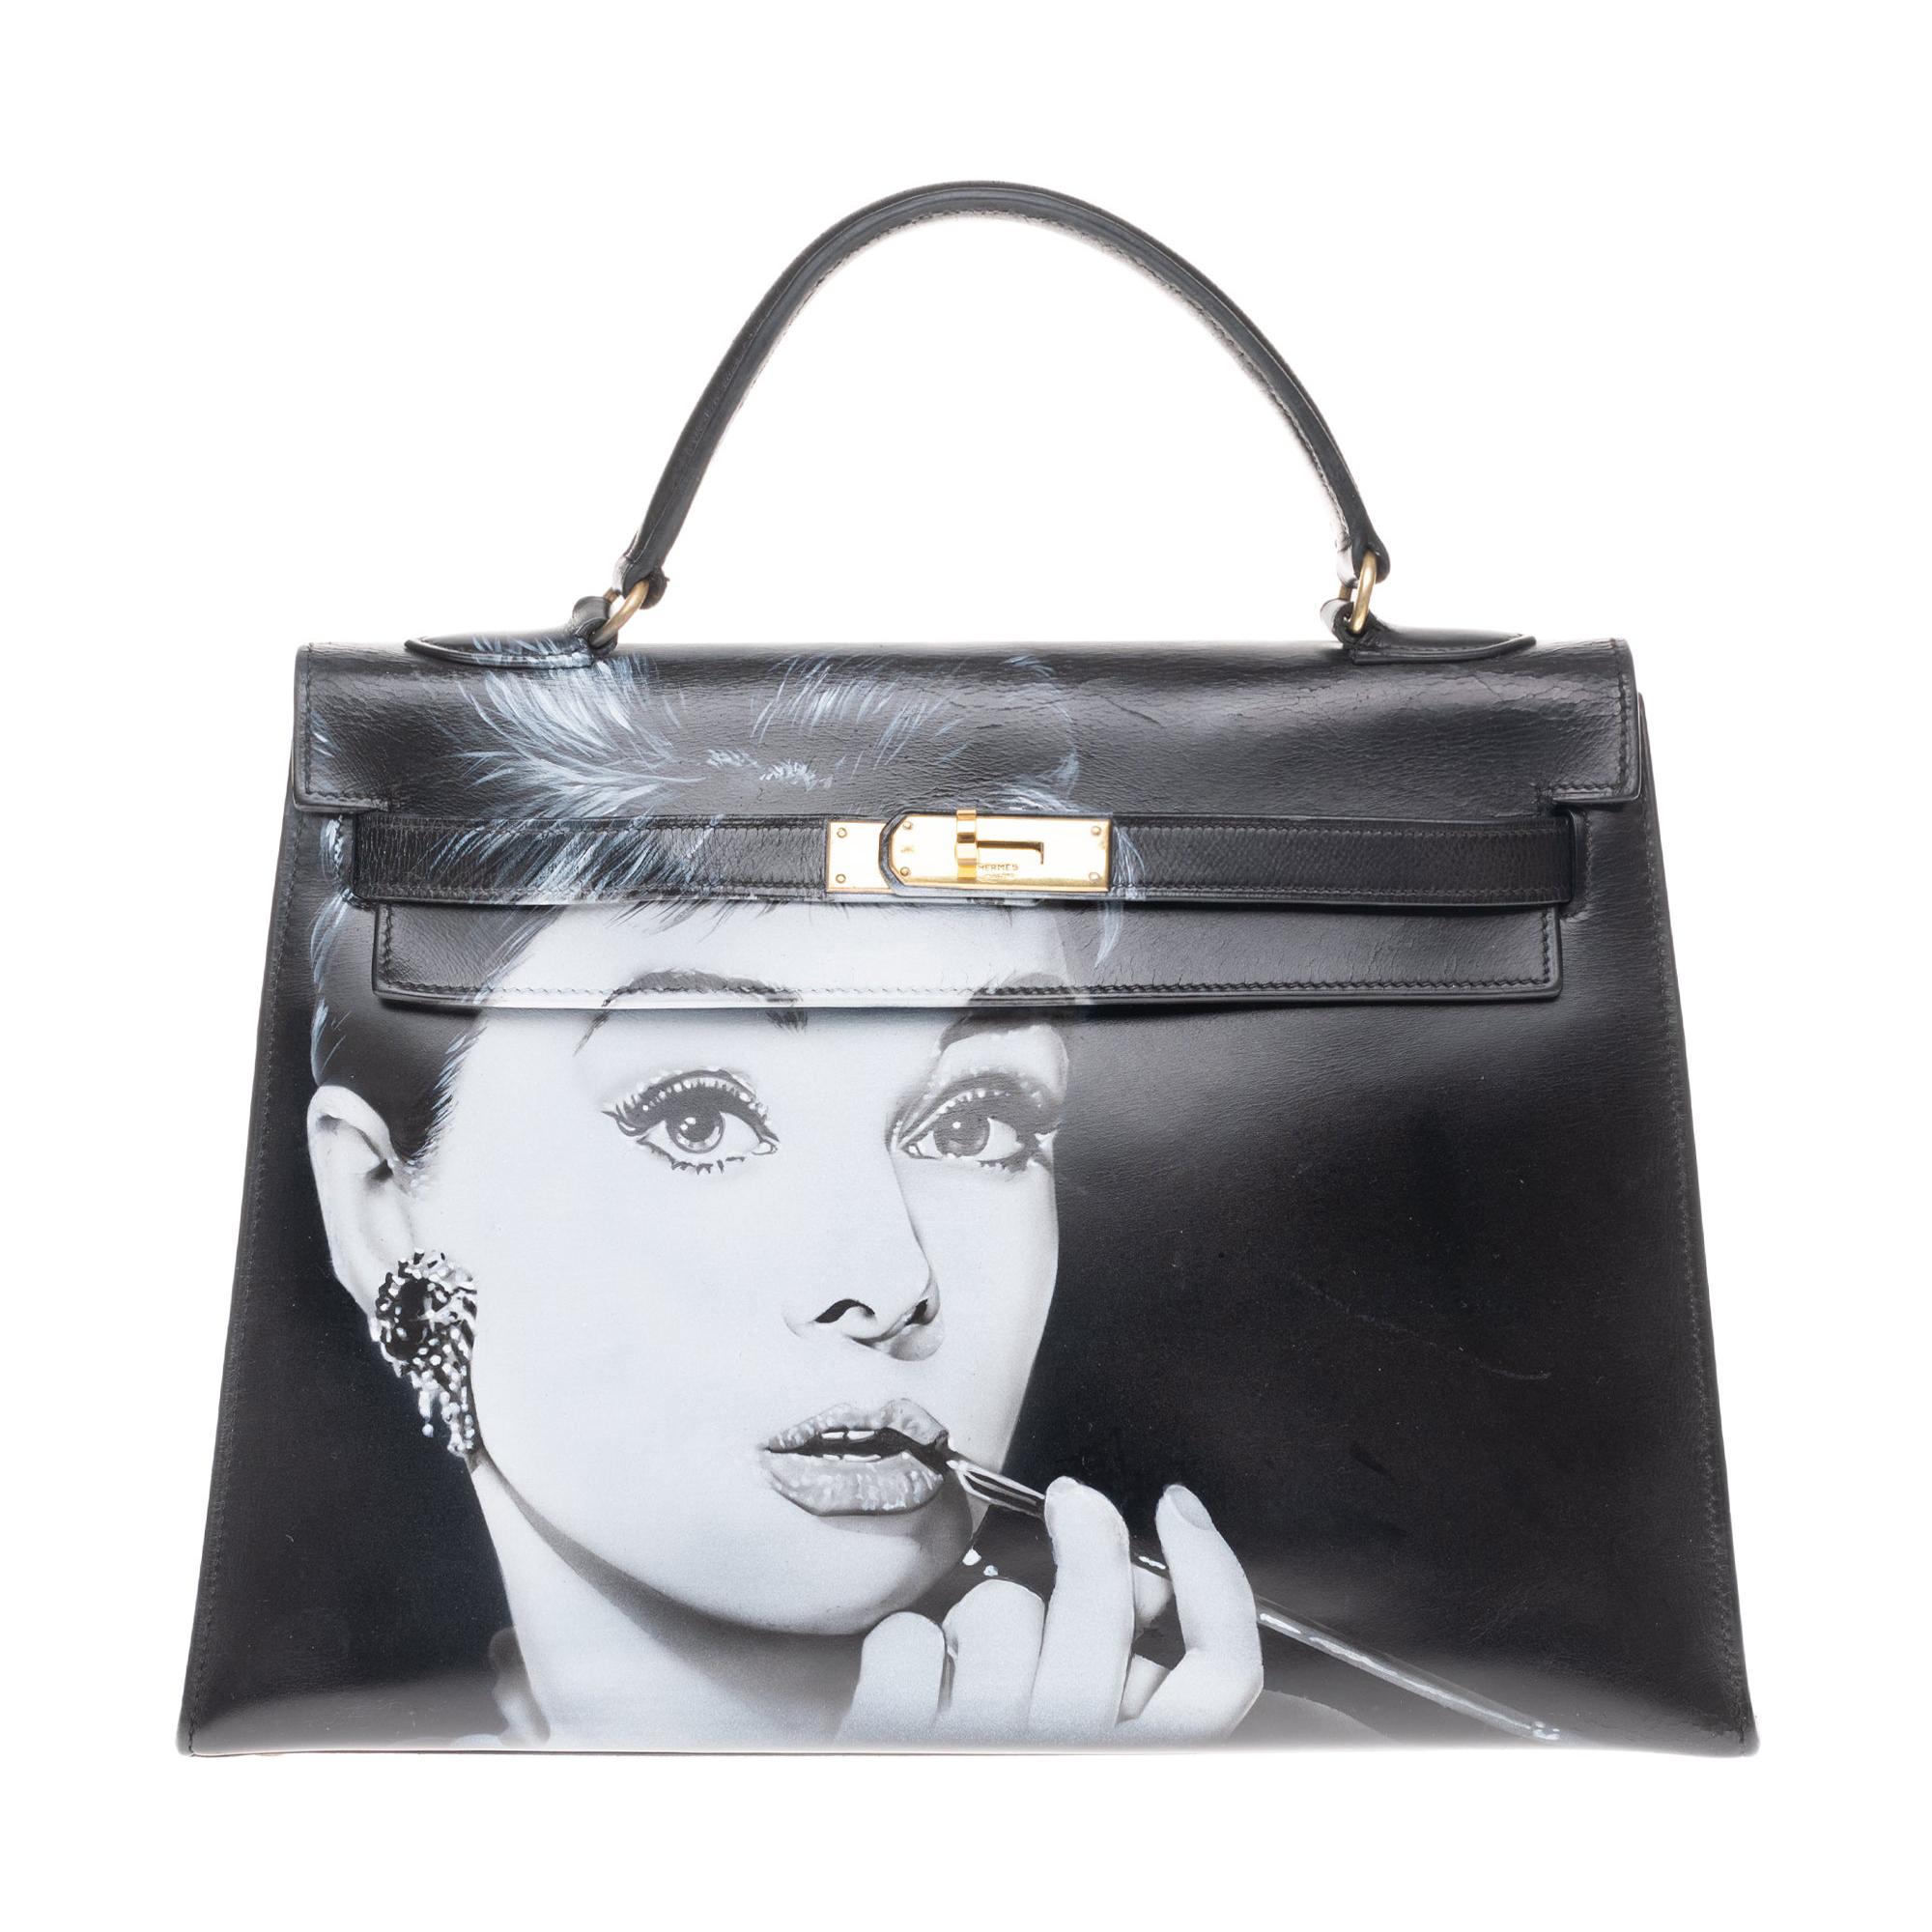 Amazing creation Audrey Hepburn on Kelly 32 cm handbag in black